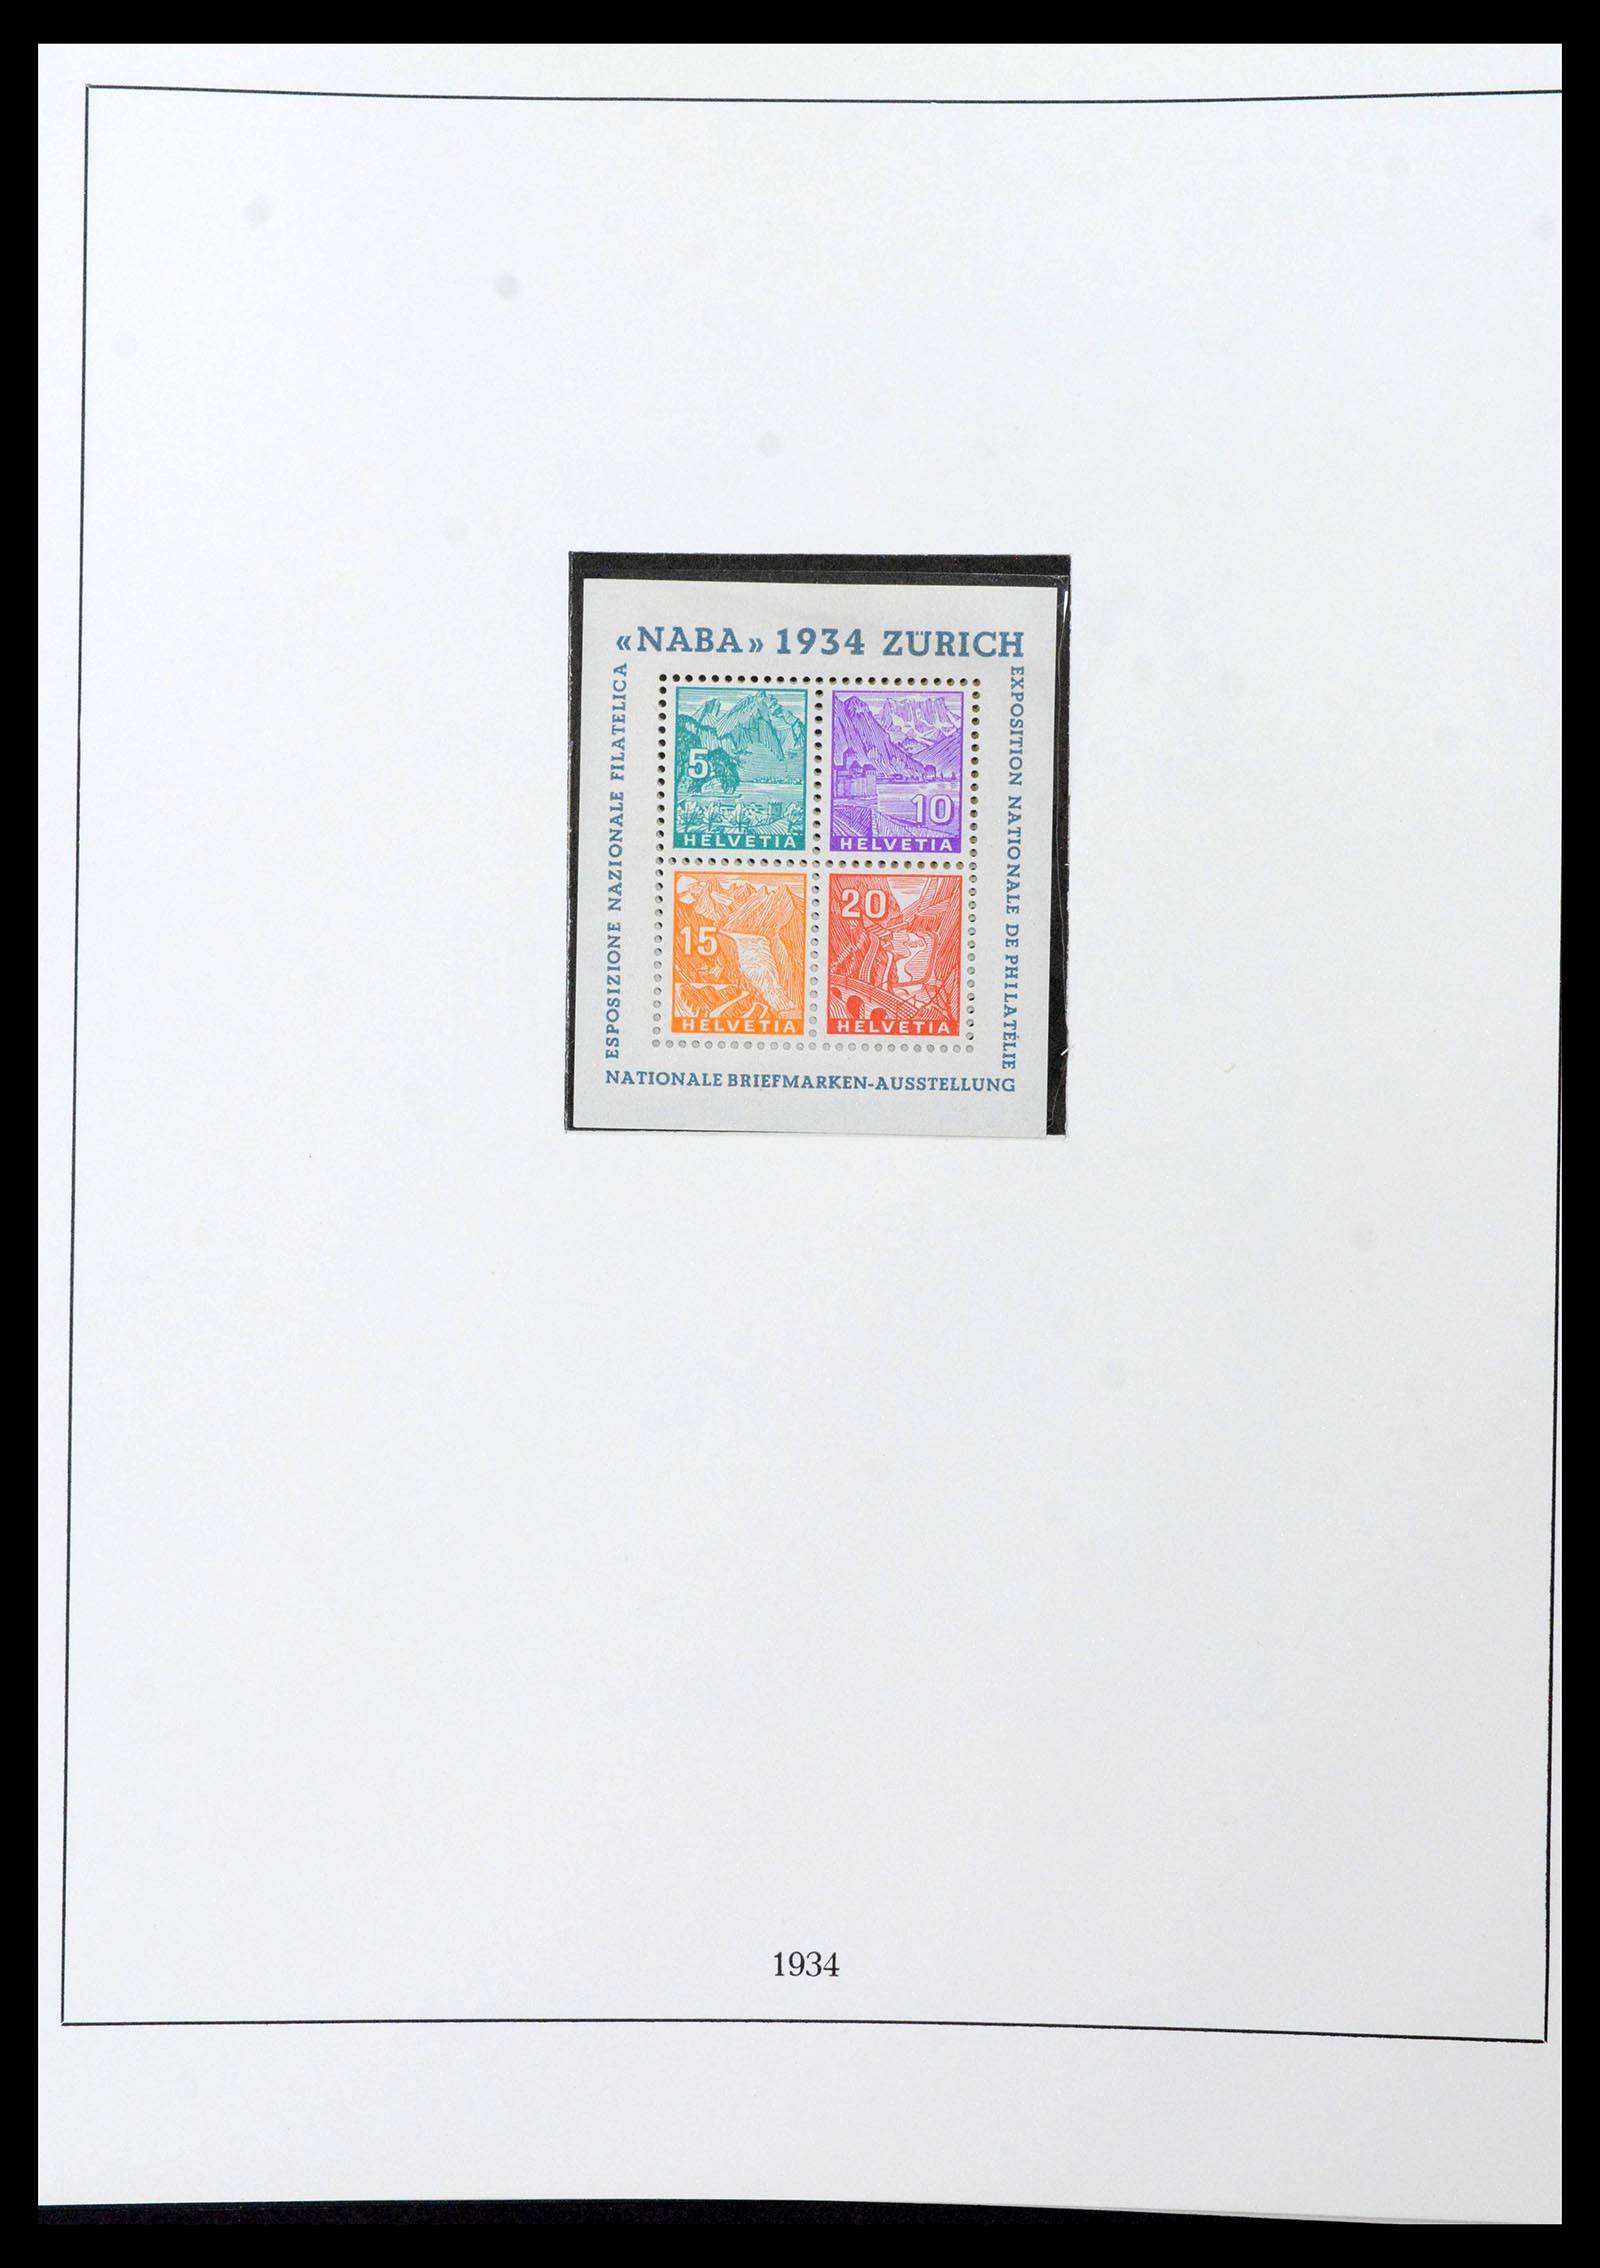 39235 0025 - Stamp collection 39235 Switzerland 1843-1960.